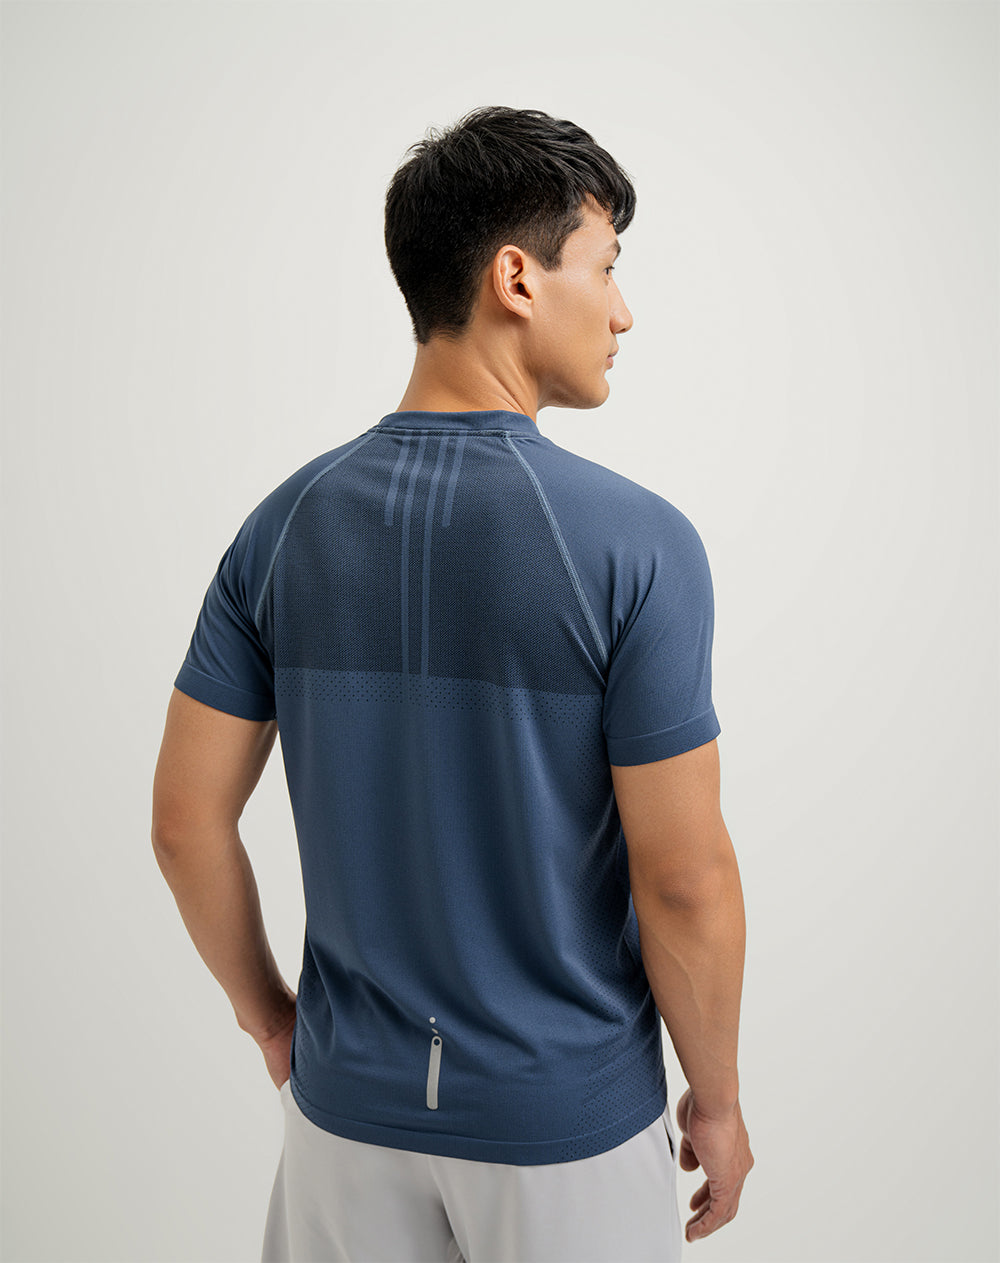 Camiseta slim fit manga corta azul